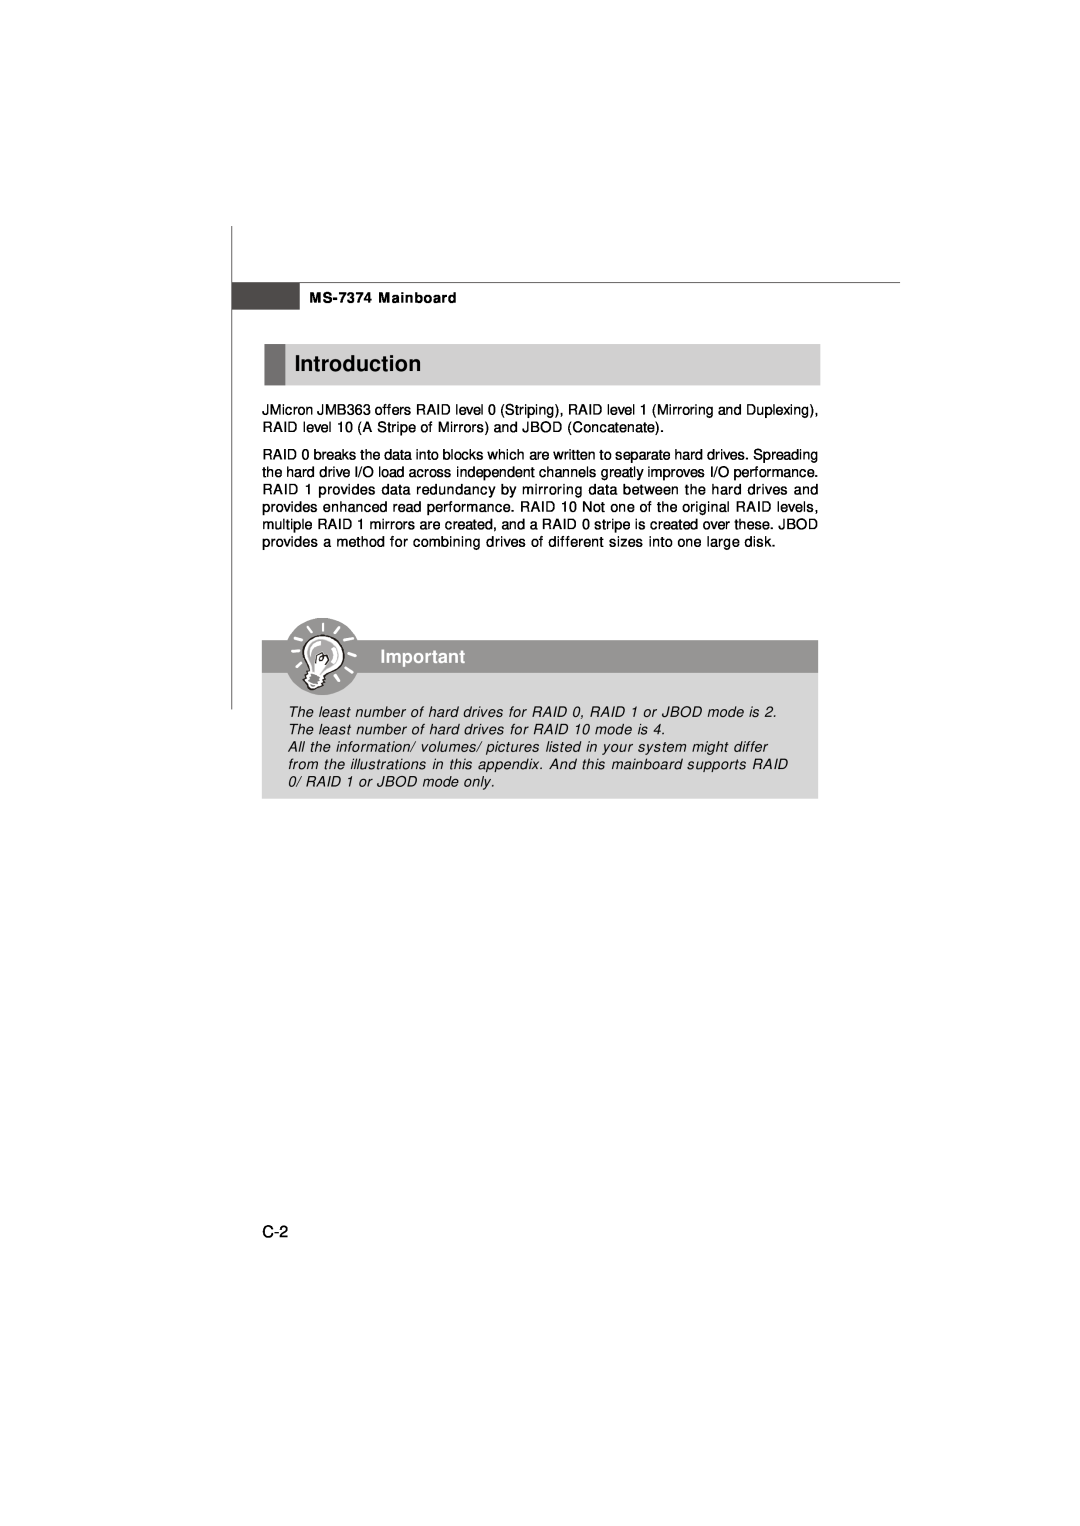 Nvidia manual Introduction, MS-7374 Mainboard 